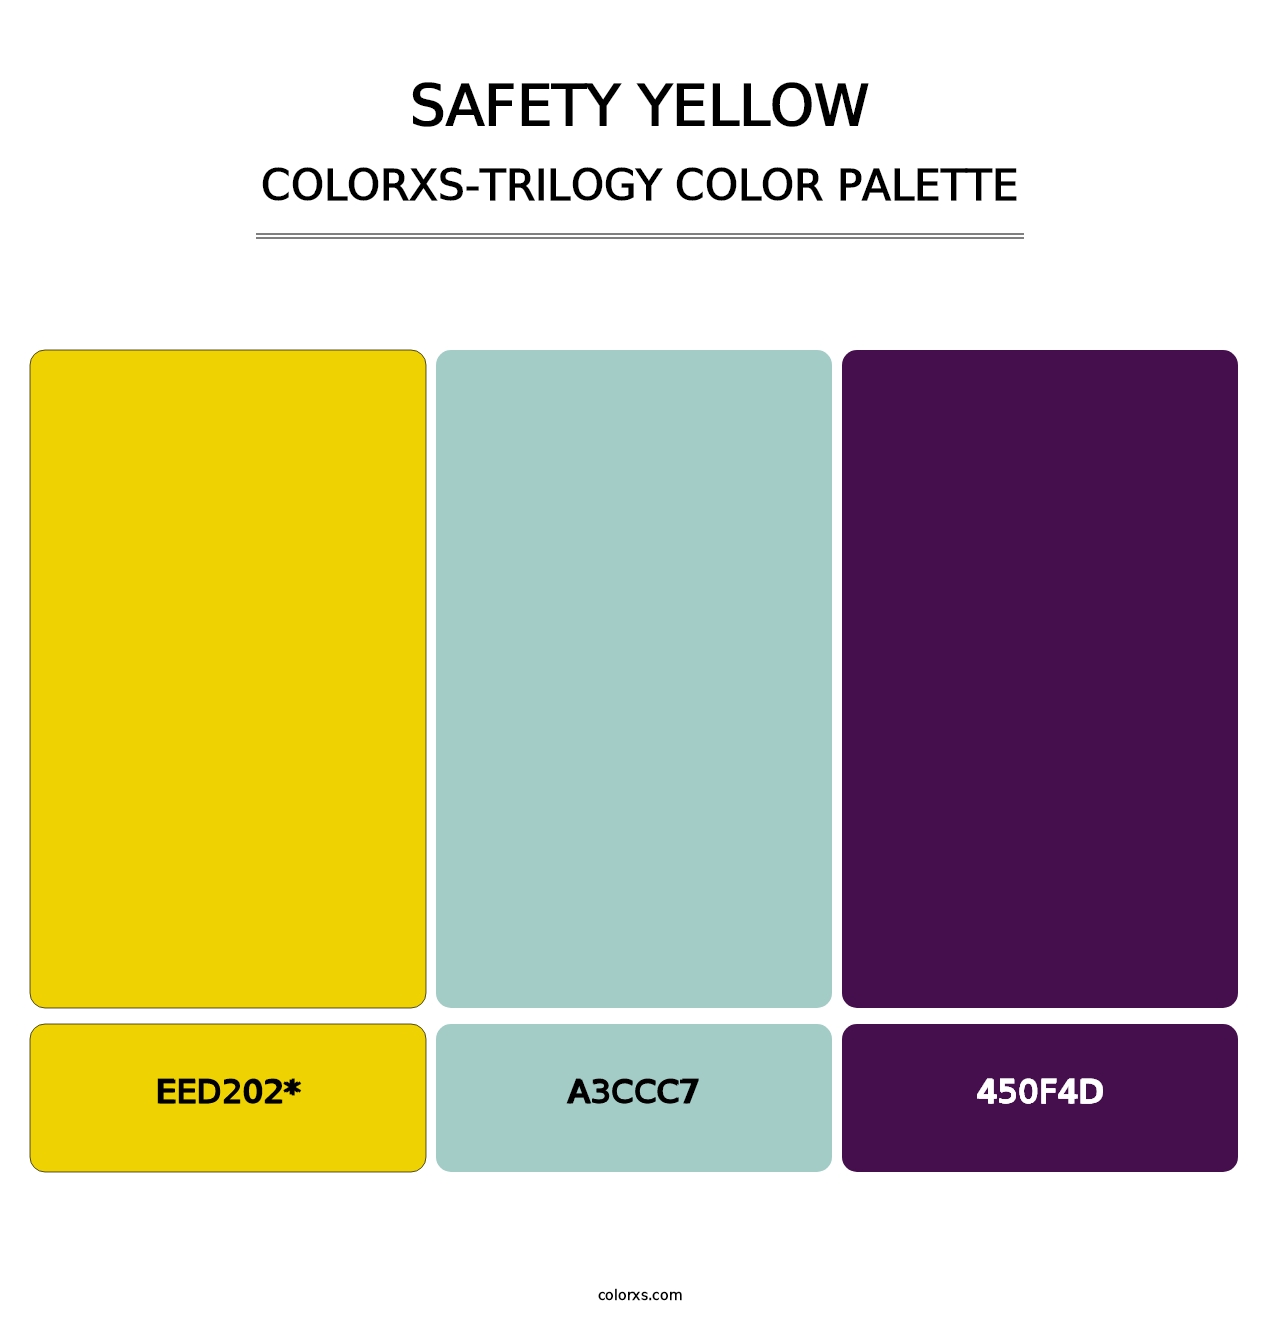 Safety Yellow - Colorxs Trilogy Palette